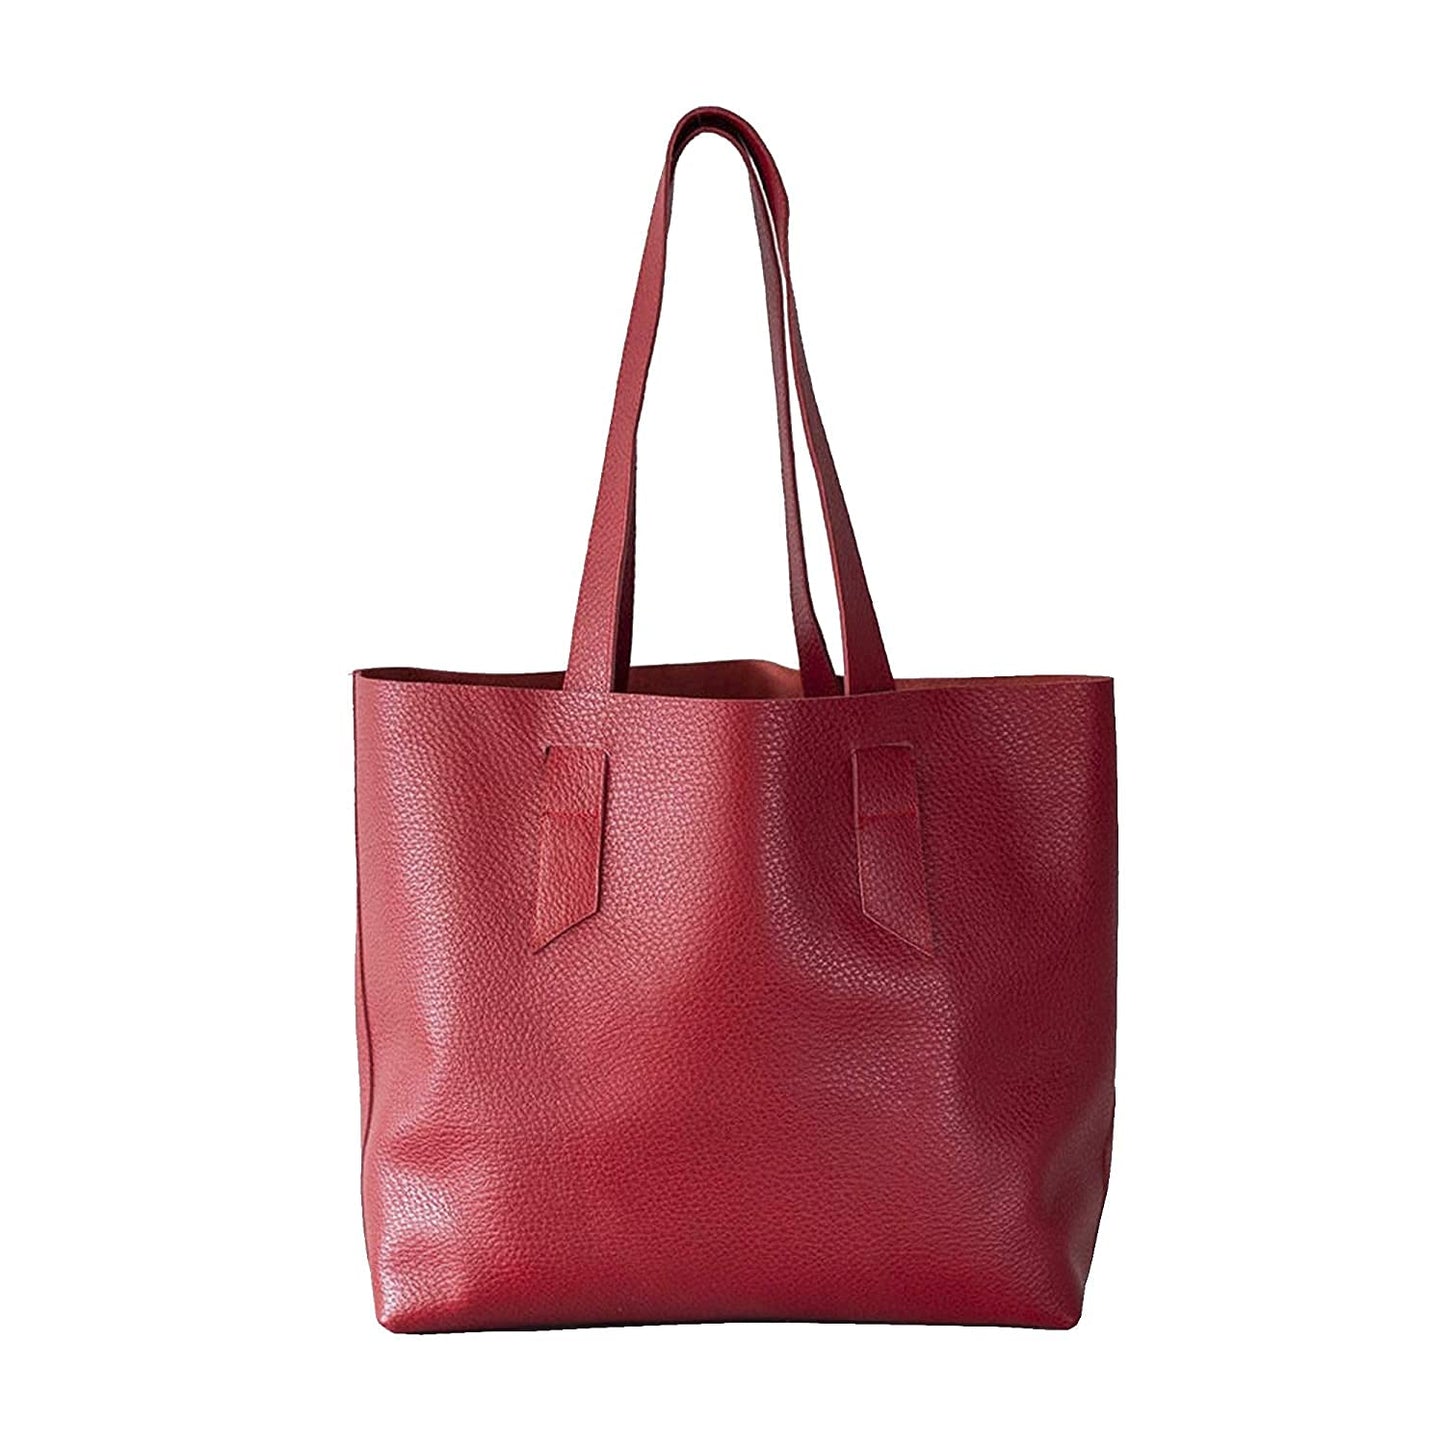 Baby Pink Leather Tote Bag for Women Raw Edge Shopper Purse Unlined Bag Leather Shoulder Bag Large Marketing Bag Everyday Tote Bag Large